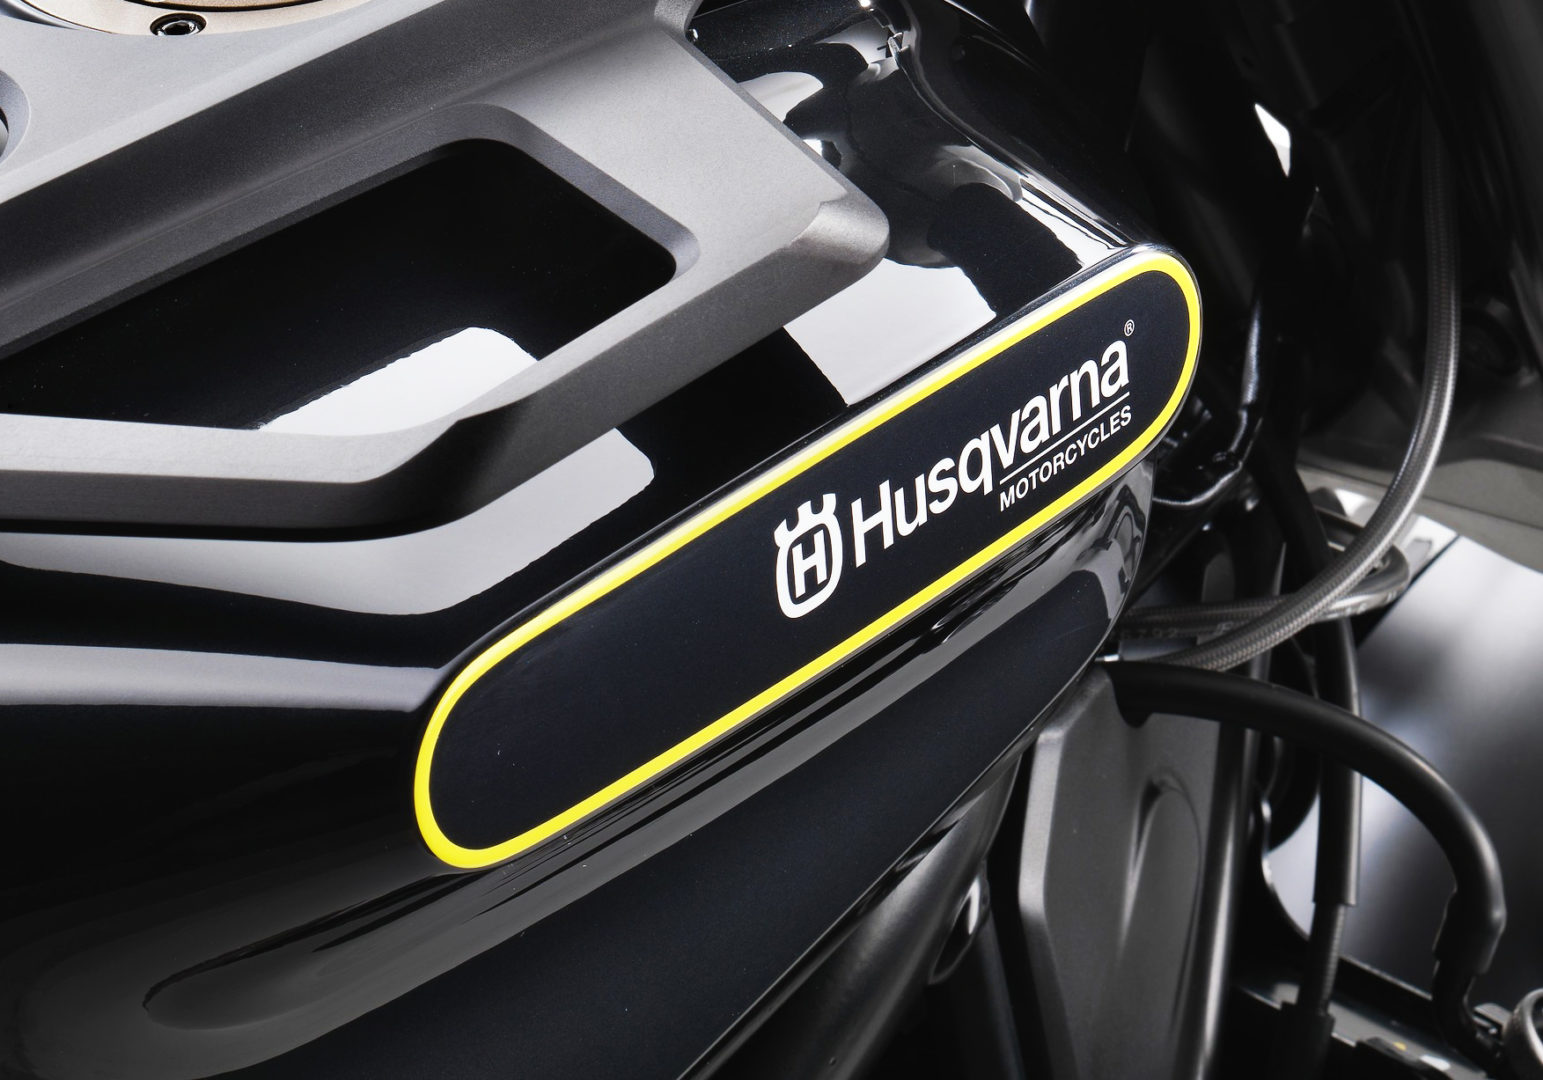 Husqvarna motorcycle logo